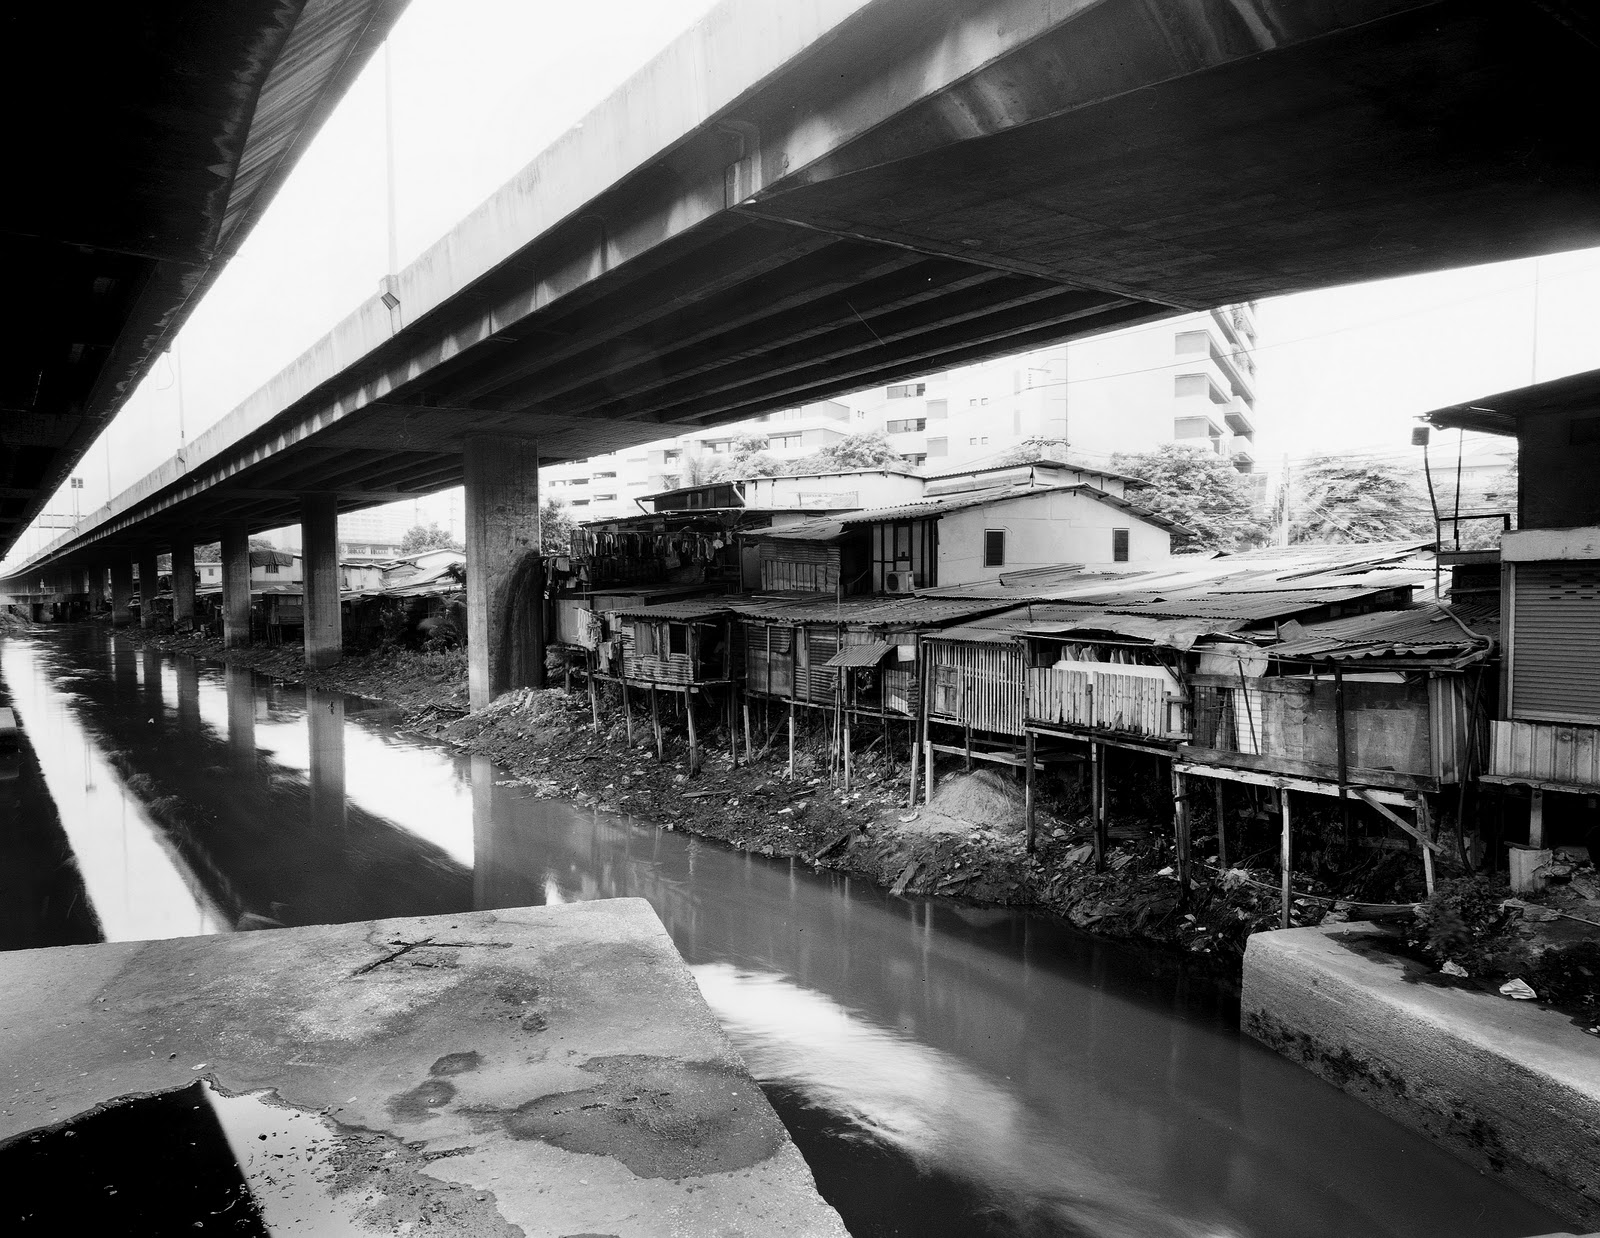 Yaum S Photo Diary More Slum Shack Canal Shots